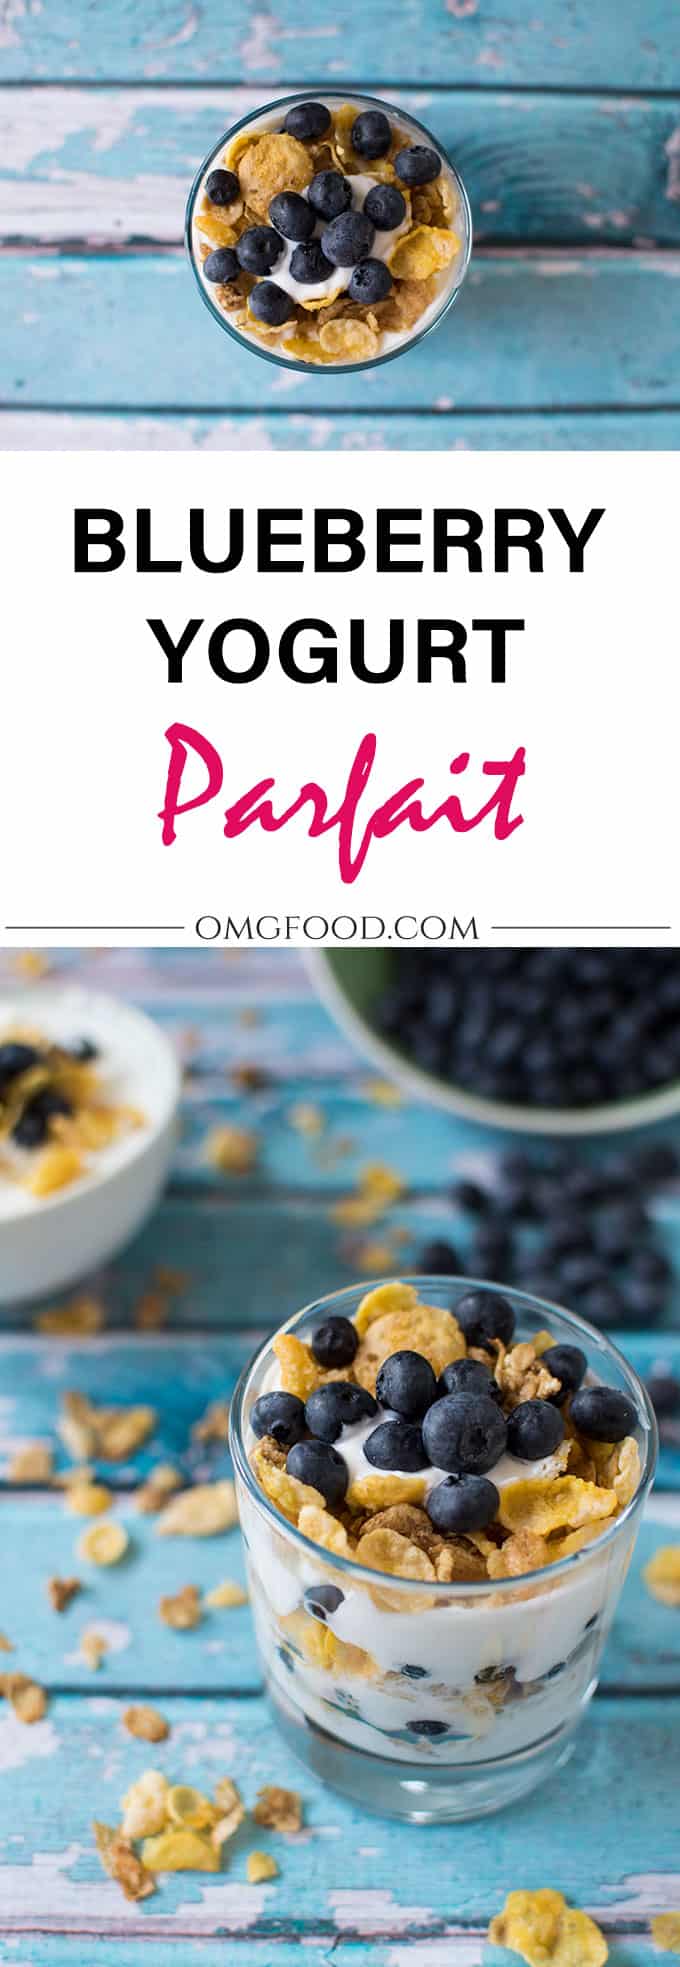 Pinterest banner for blueberry yogurt parfait.